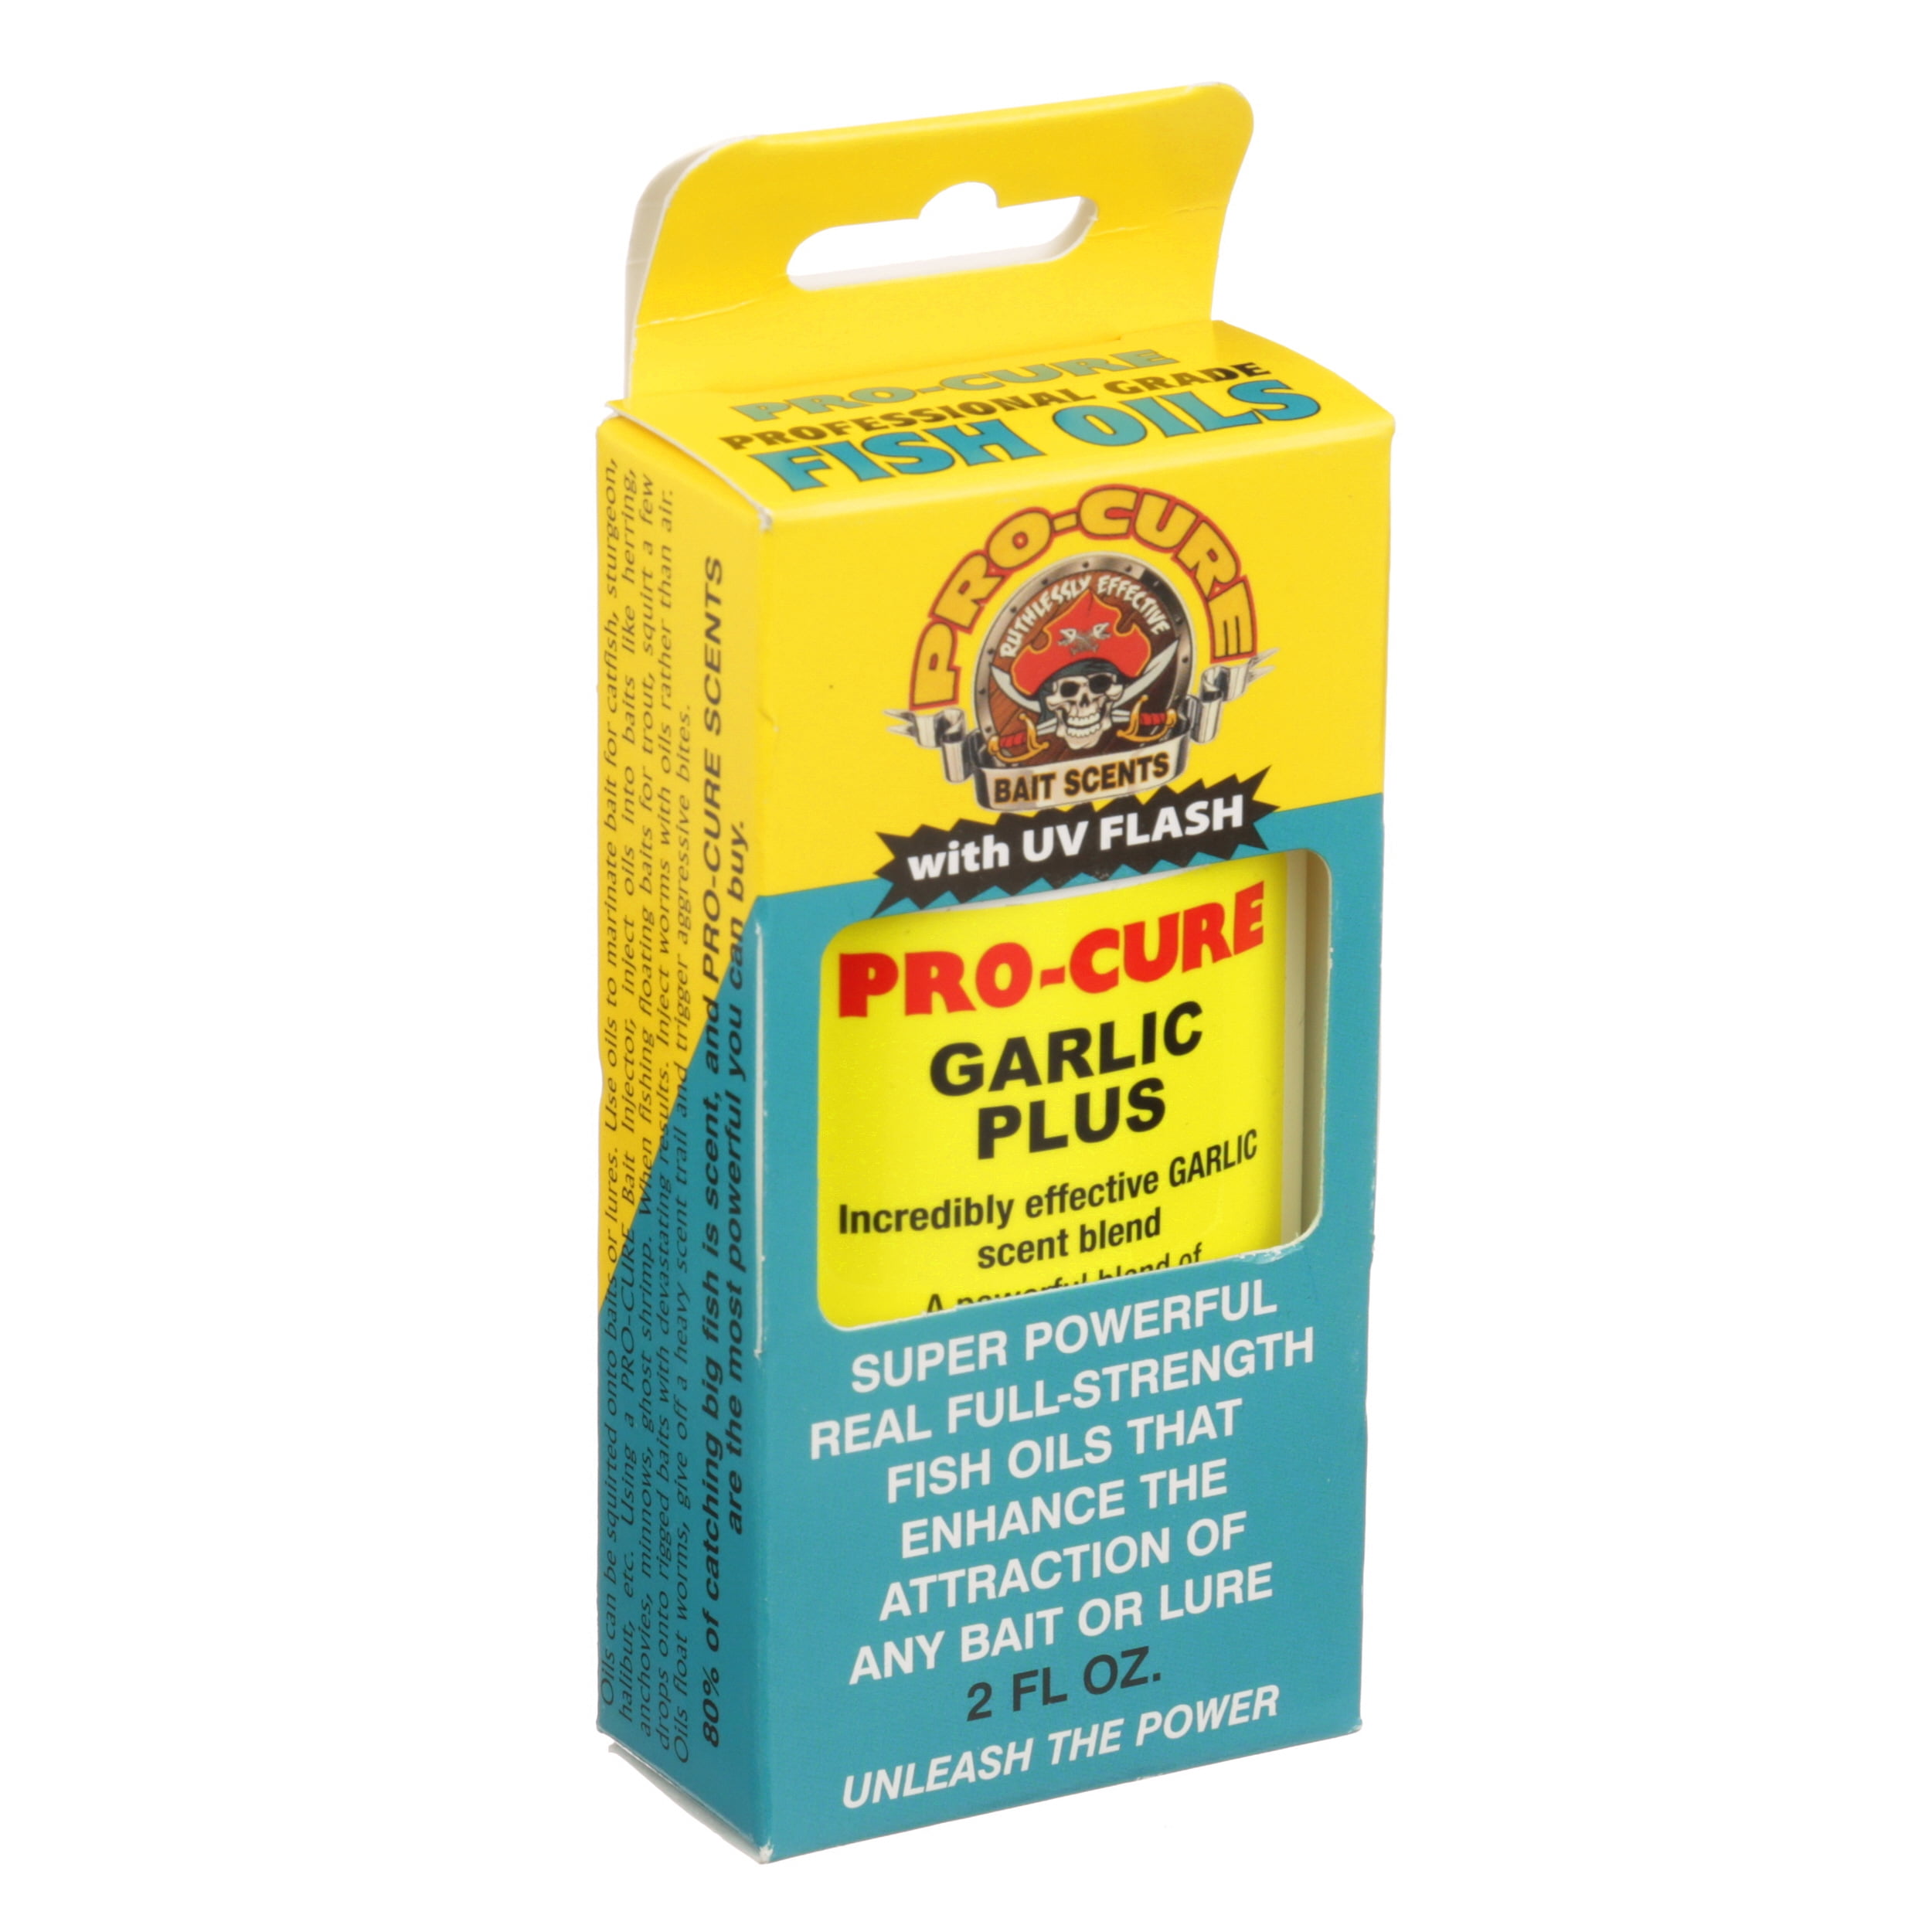 Pro-Cure Brand Garlic Plus Scent with UV Flash 